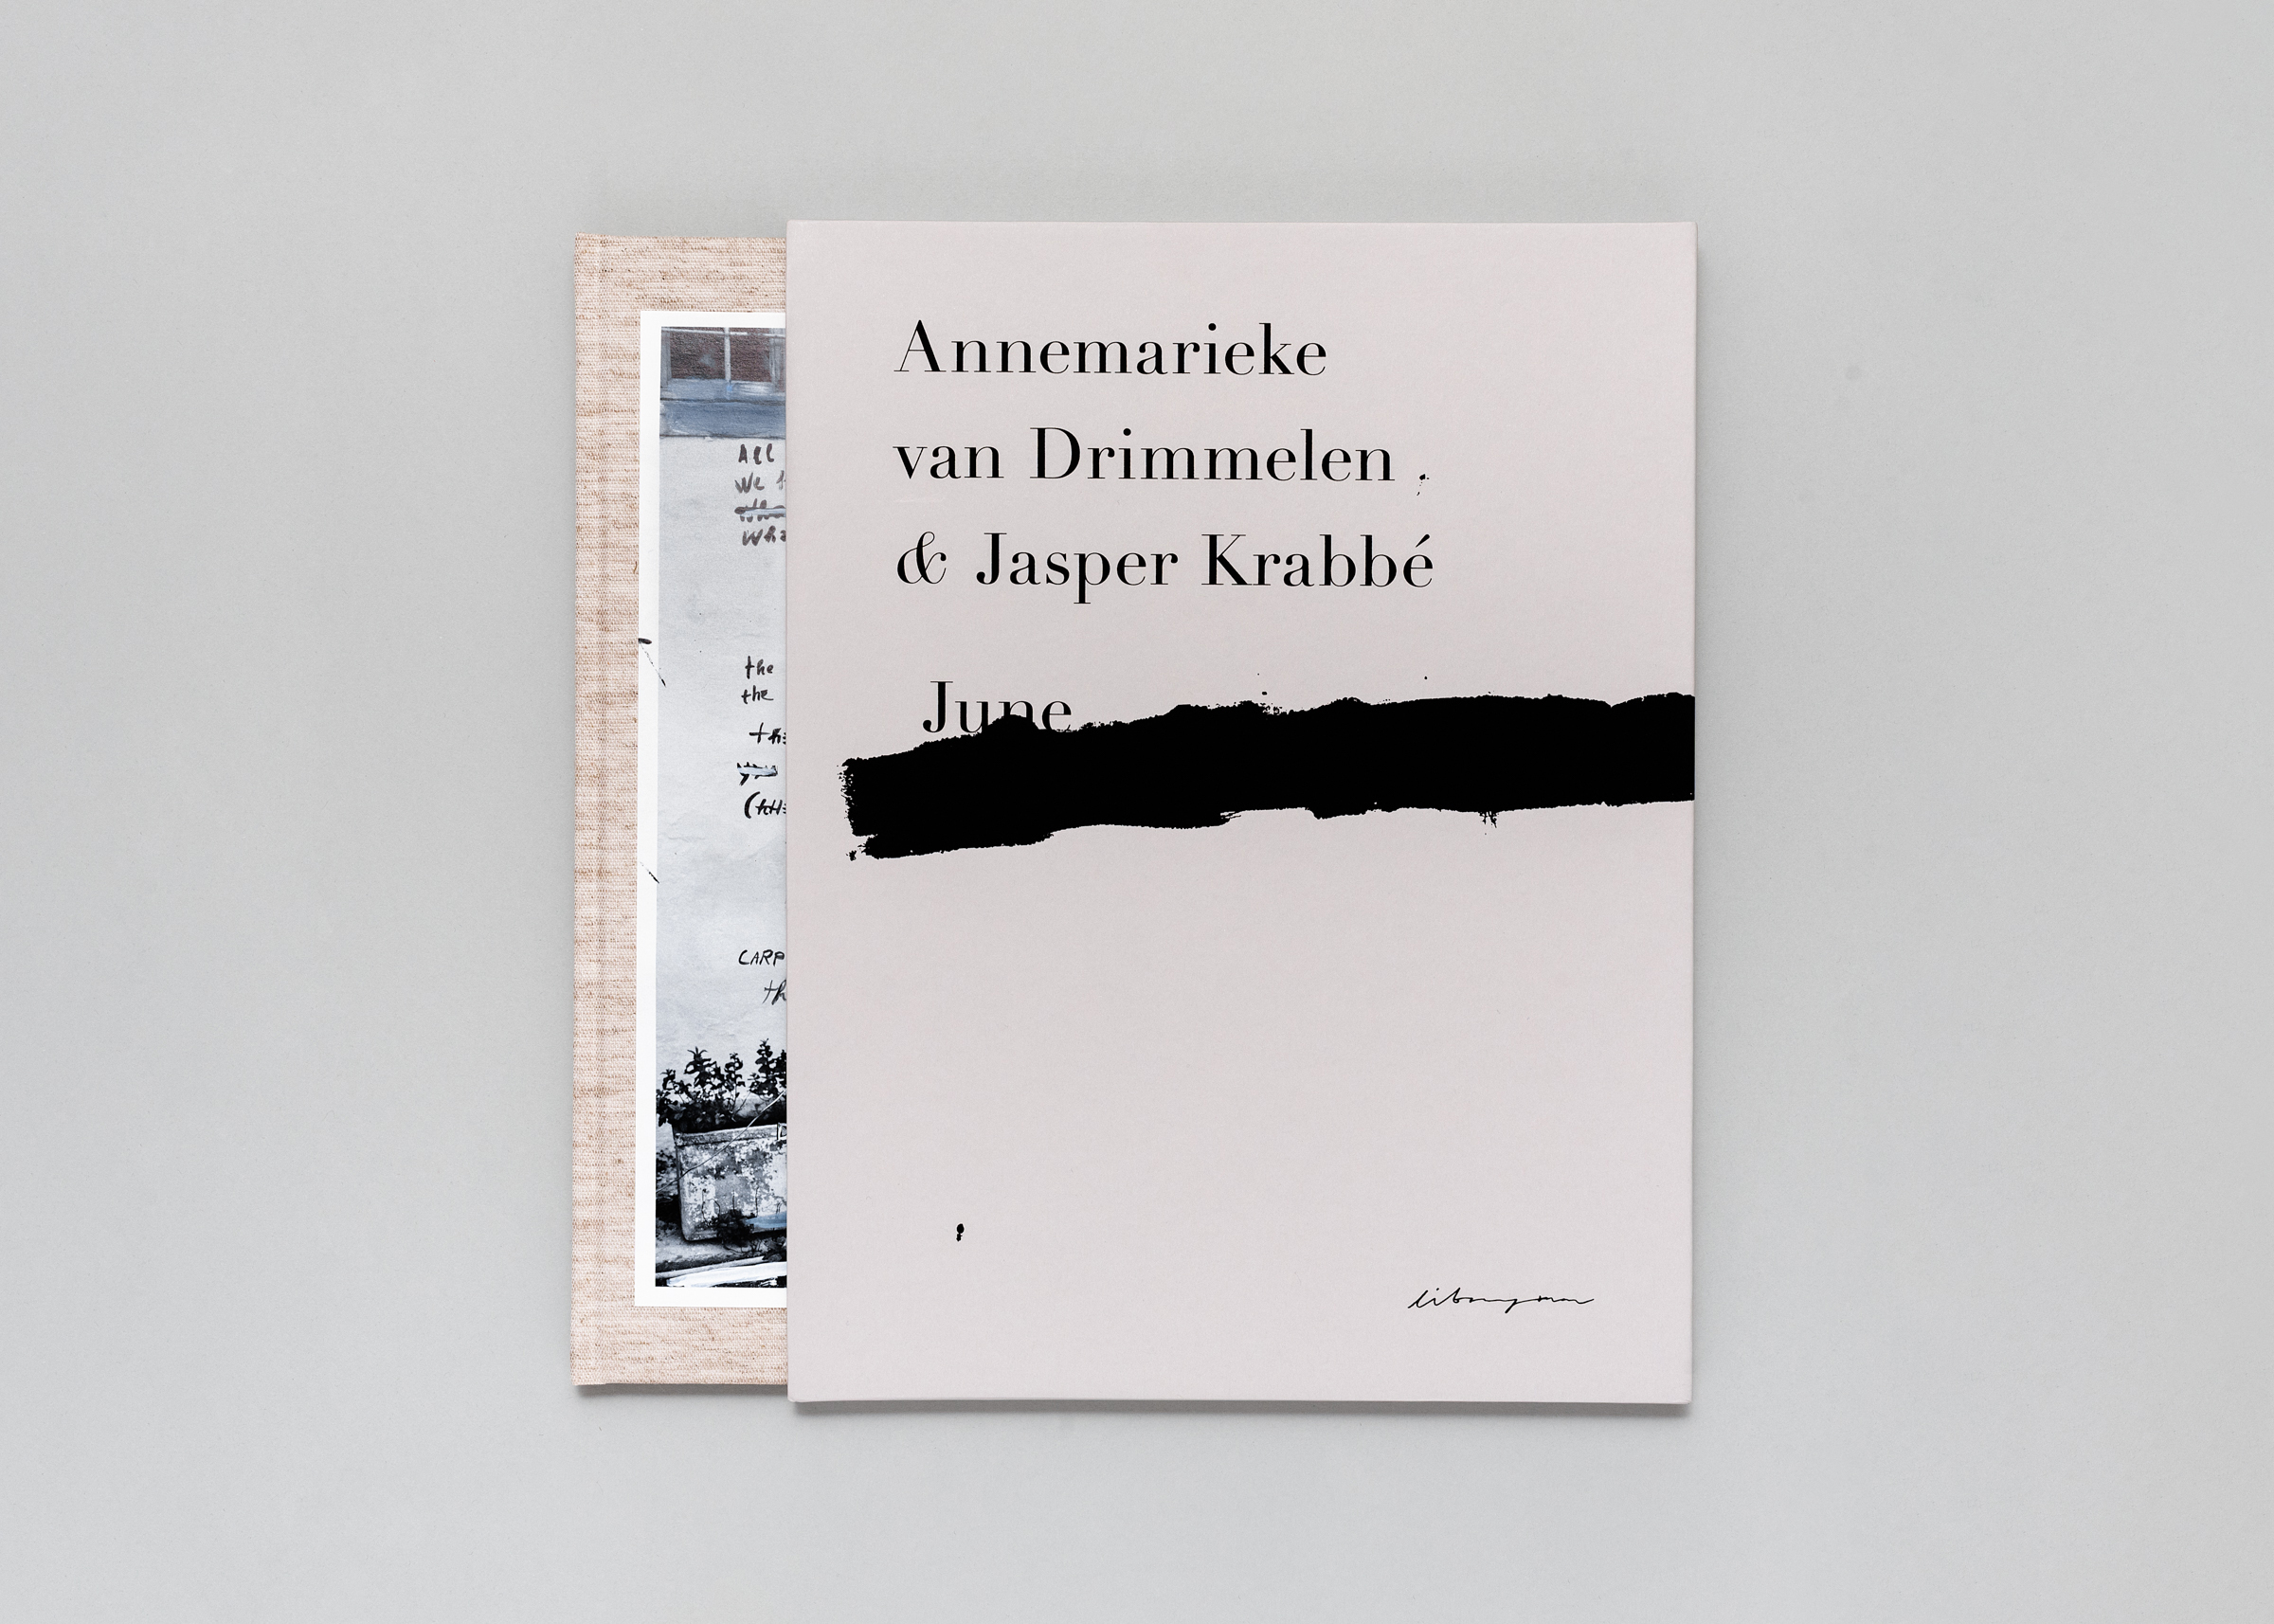 Annemarieke van Drimmelen & Jasper Krabbé — June